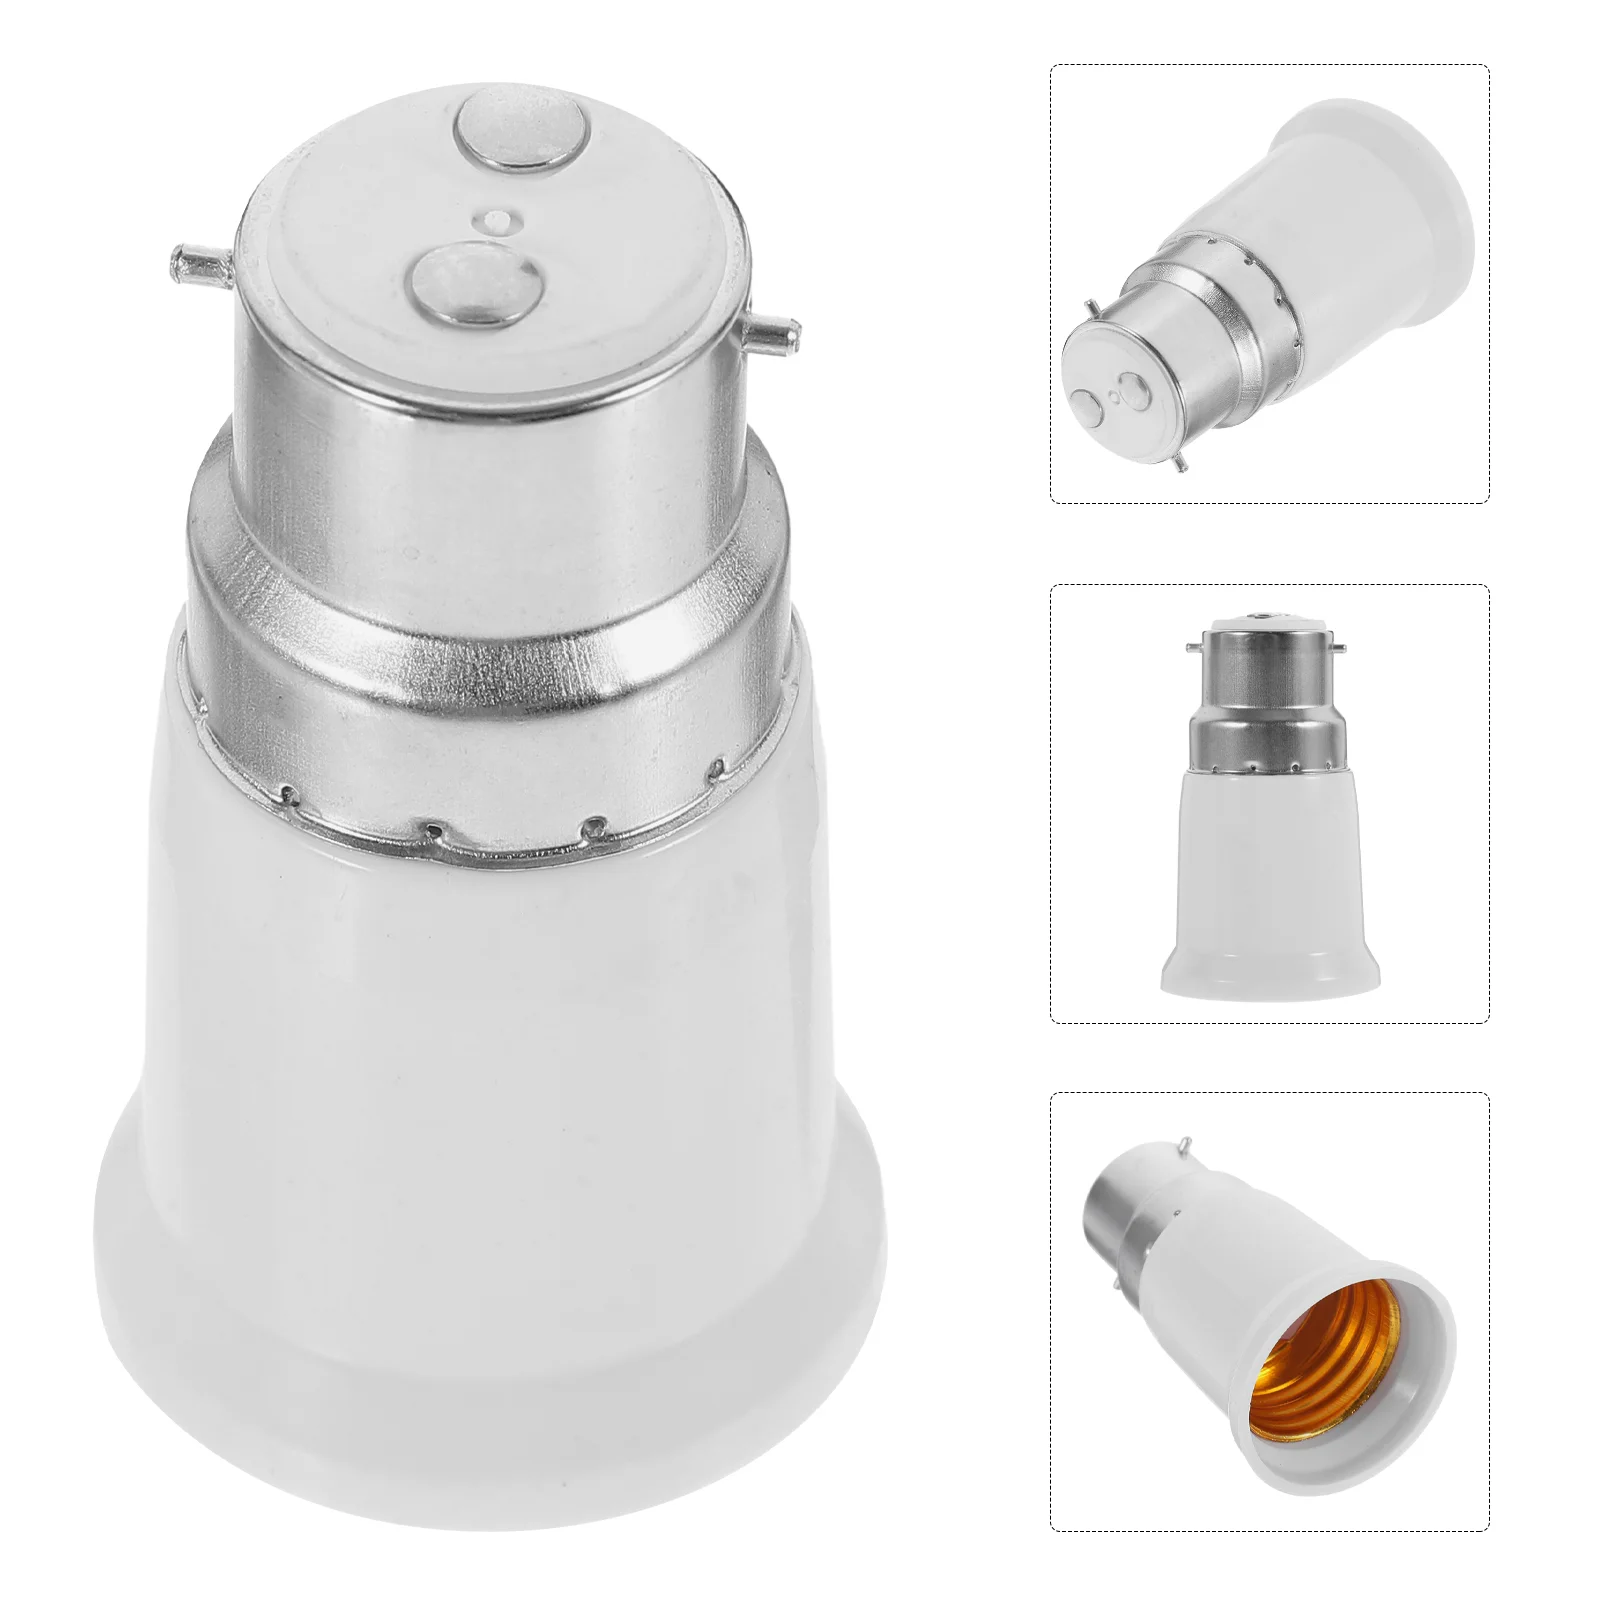 

6Pcs Bulb Adapter Converters Chandelier Lamp Base Converter B22 to E27 Light Socket Adapters